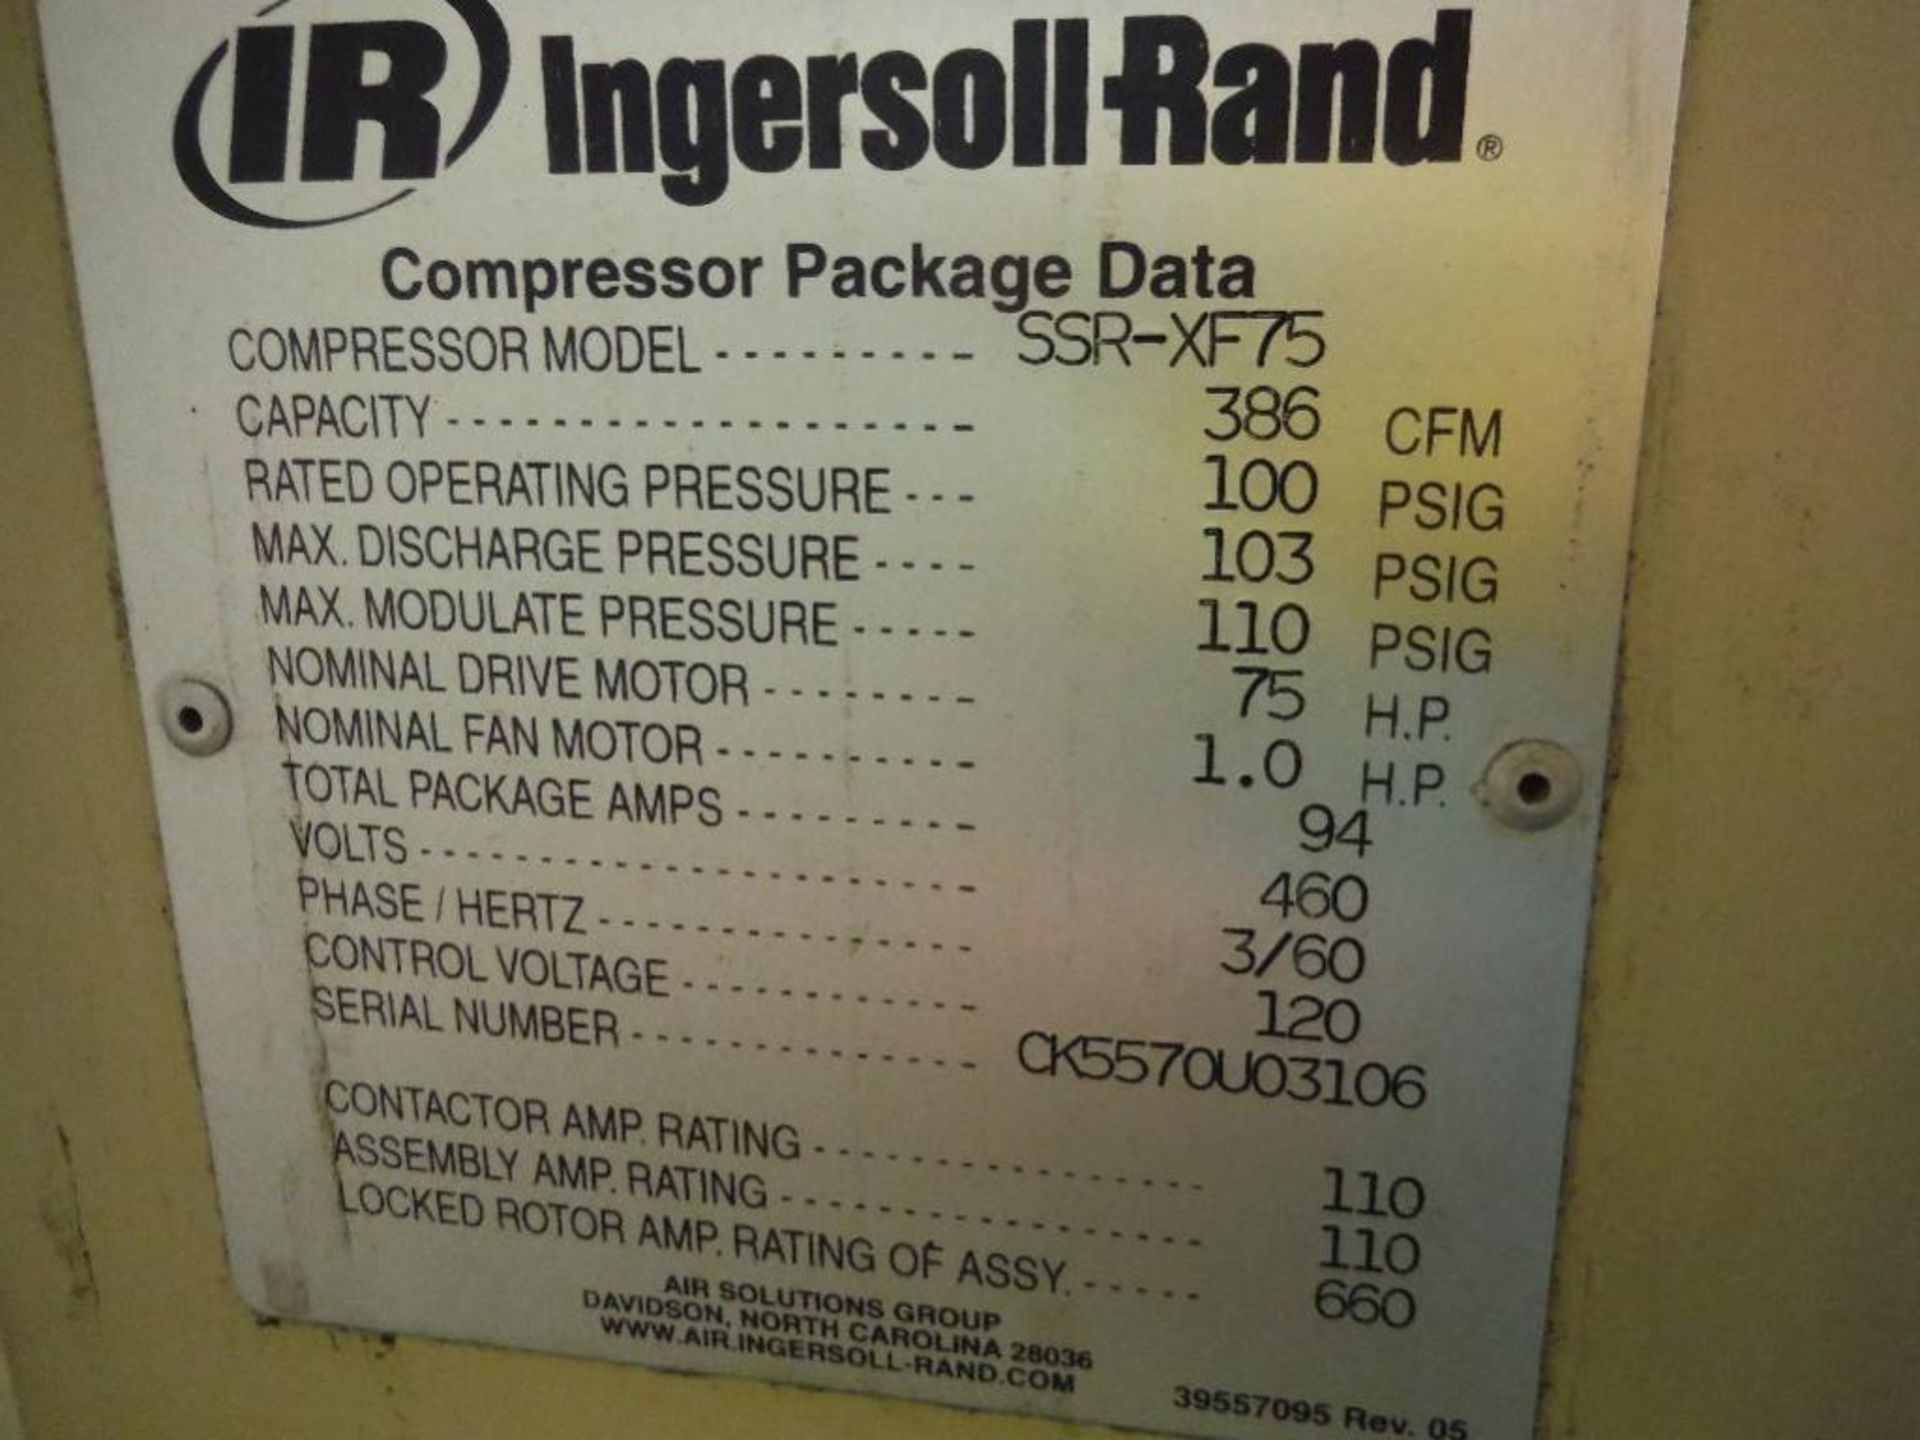 Ingersoll Rand 75 hp rotary screw compressor, Model SRR-XF75, SN CK5570U03106 , 21,750 hours, 386 CF - Image 5 of 10